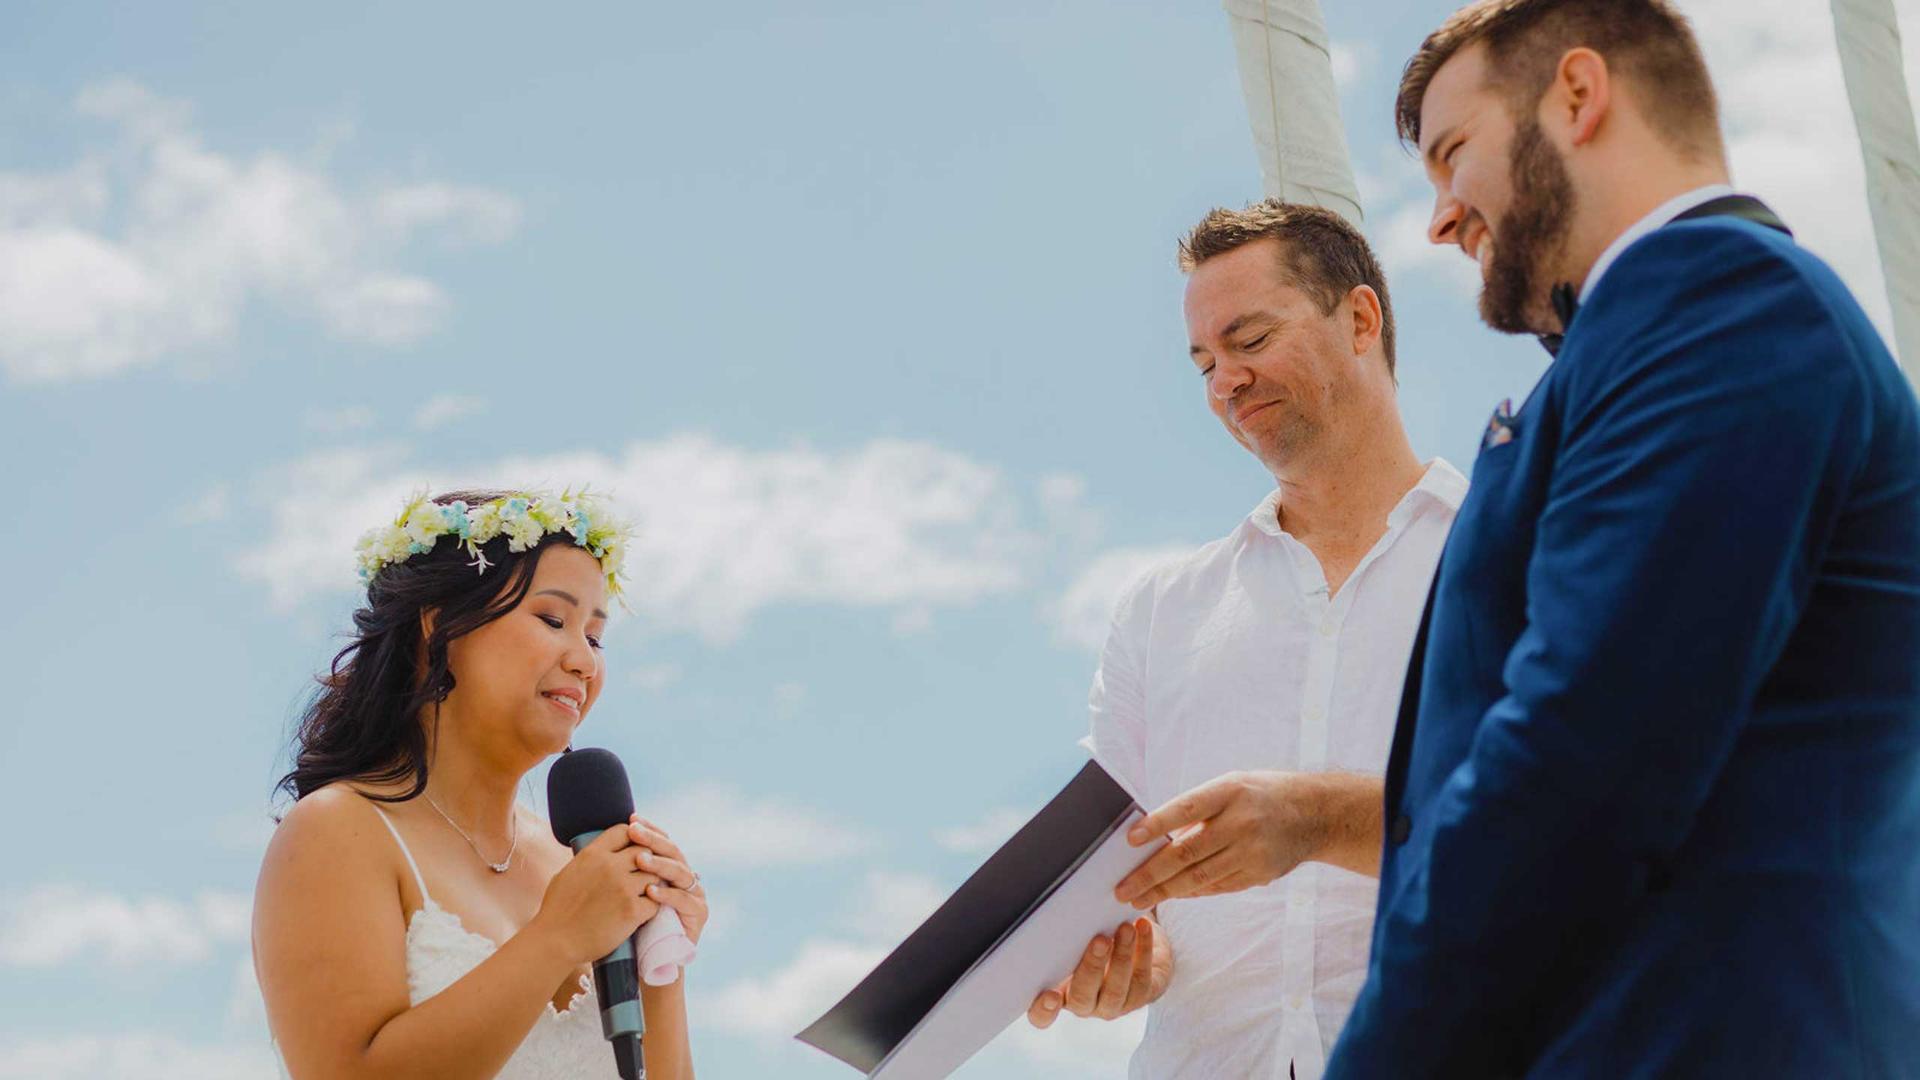 Jon Pickford: Wedding Celebrant